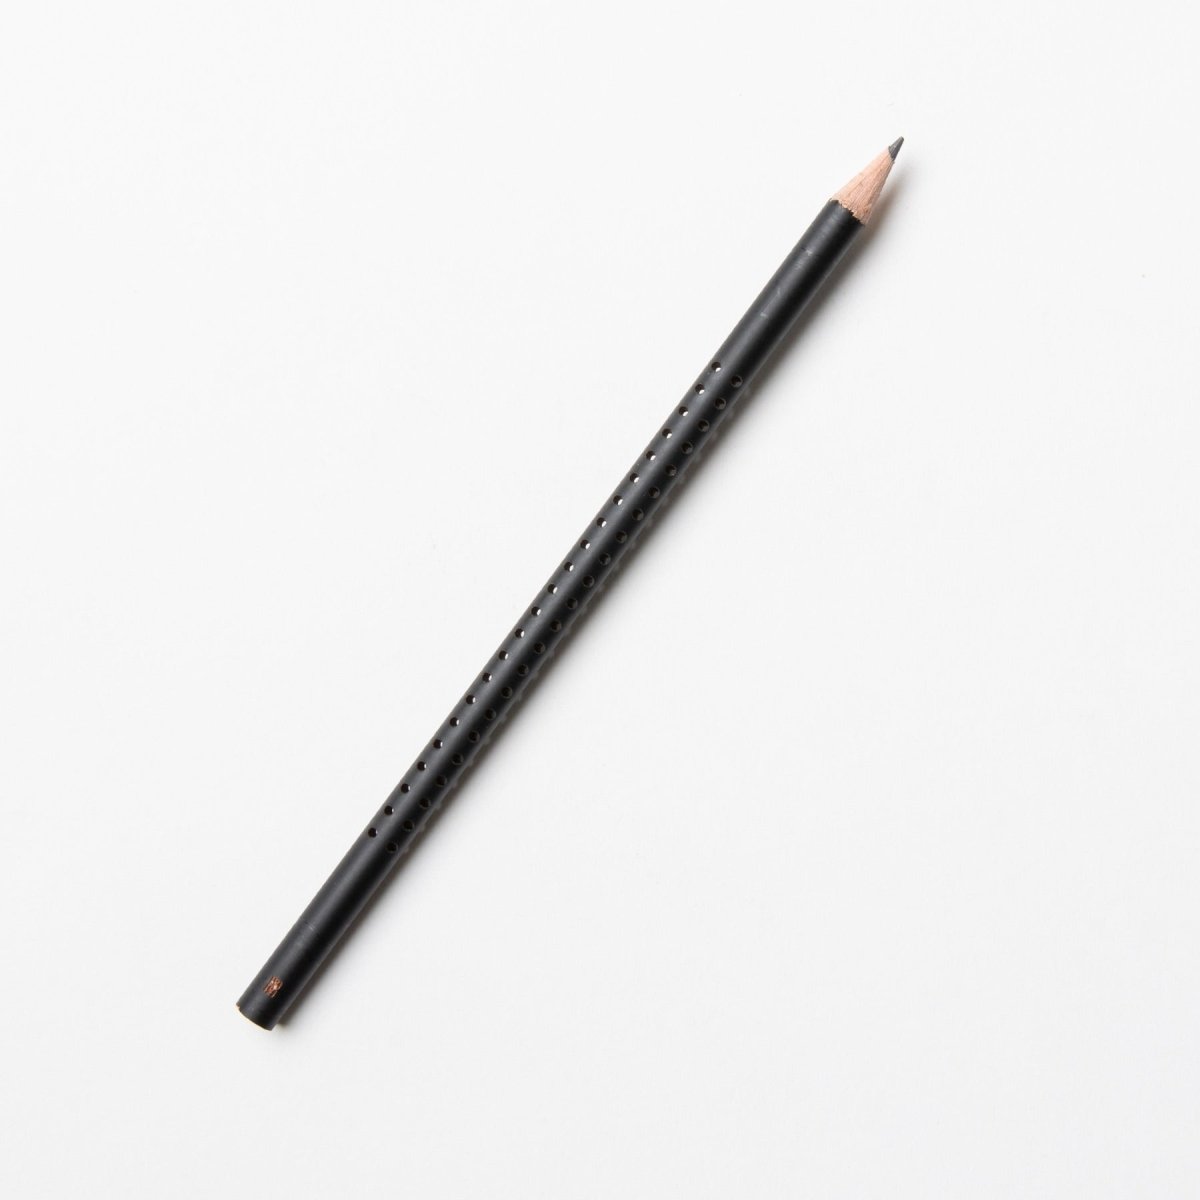 Tät-Tat - Bleistift Punkt Pencil - Autotype Design Tools